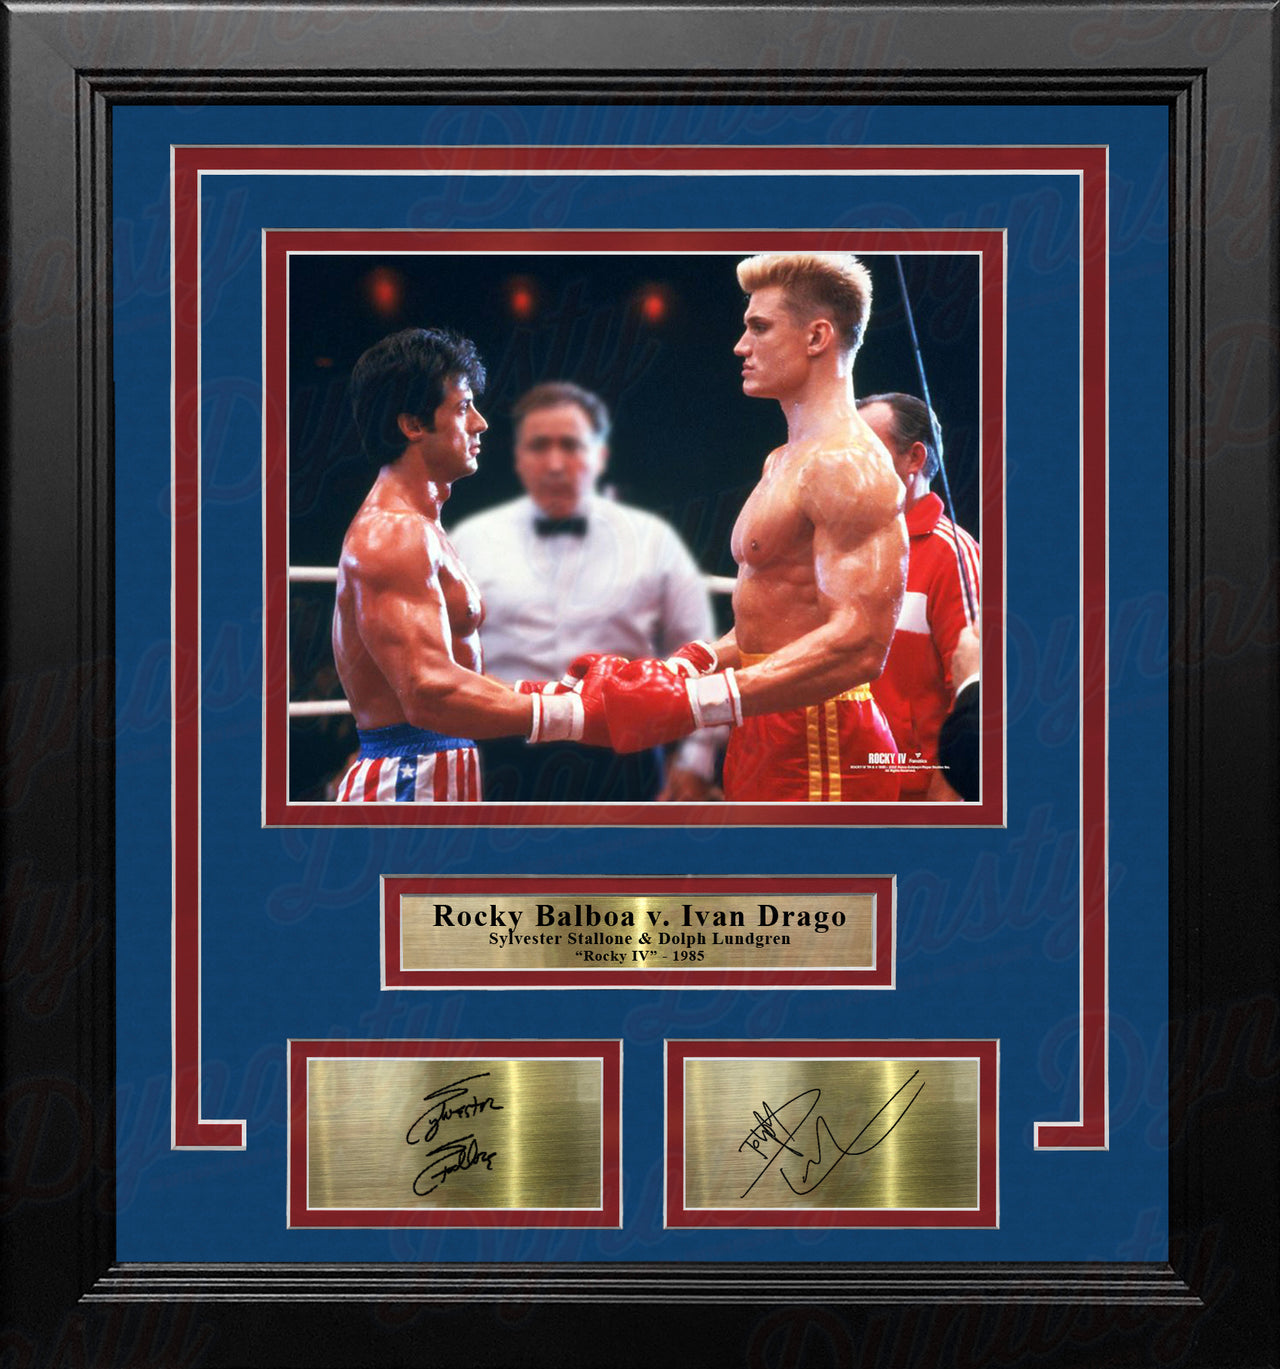 Rocky Balboa v. Ivan Drago 8" x 10" Framed Movie Photo with Engraved Autographs - Dynasty Sports & Framing 